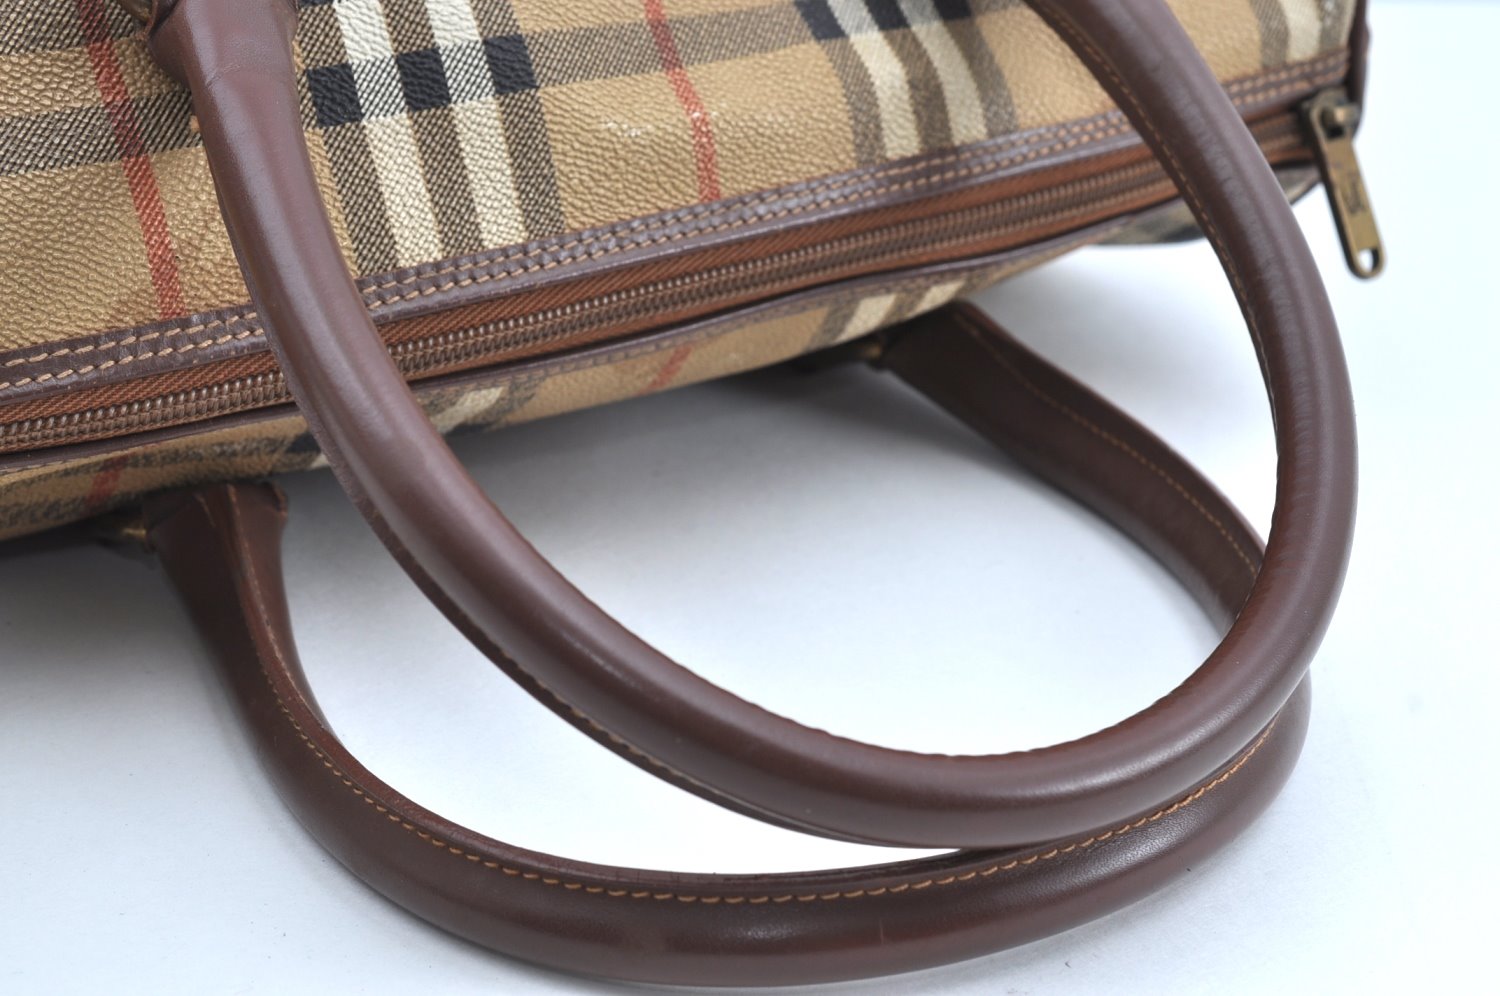 Authentic Burberrys Nova Check PVC Leather Hand Boston Bag Brown Beige 3159G